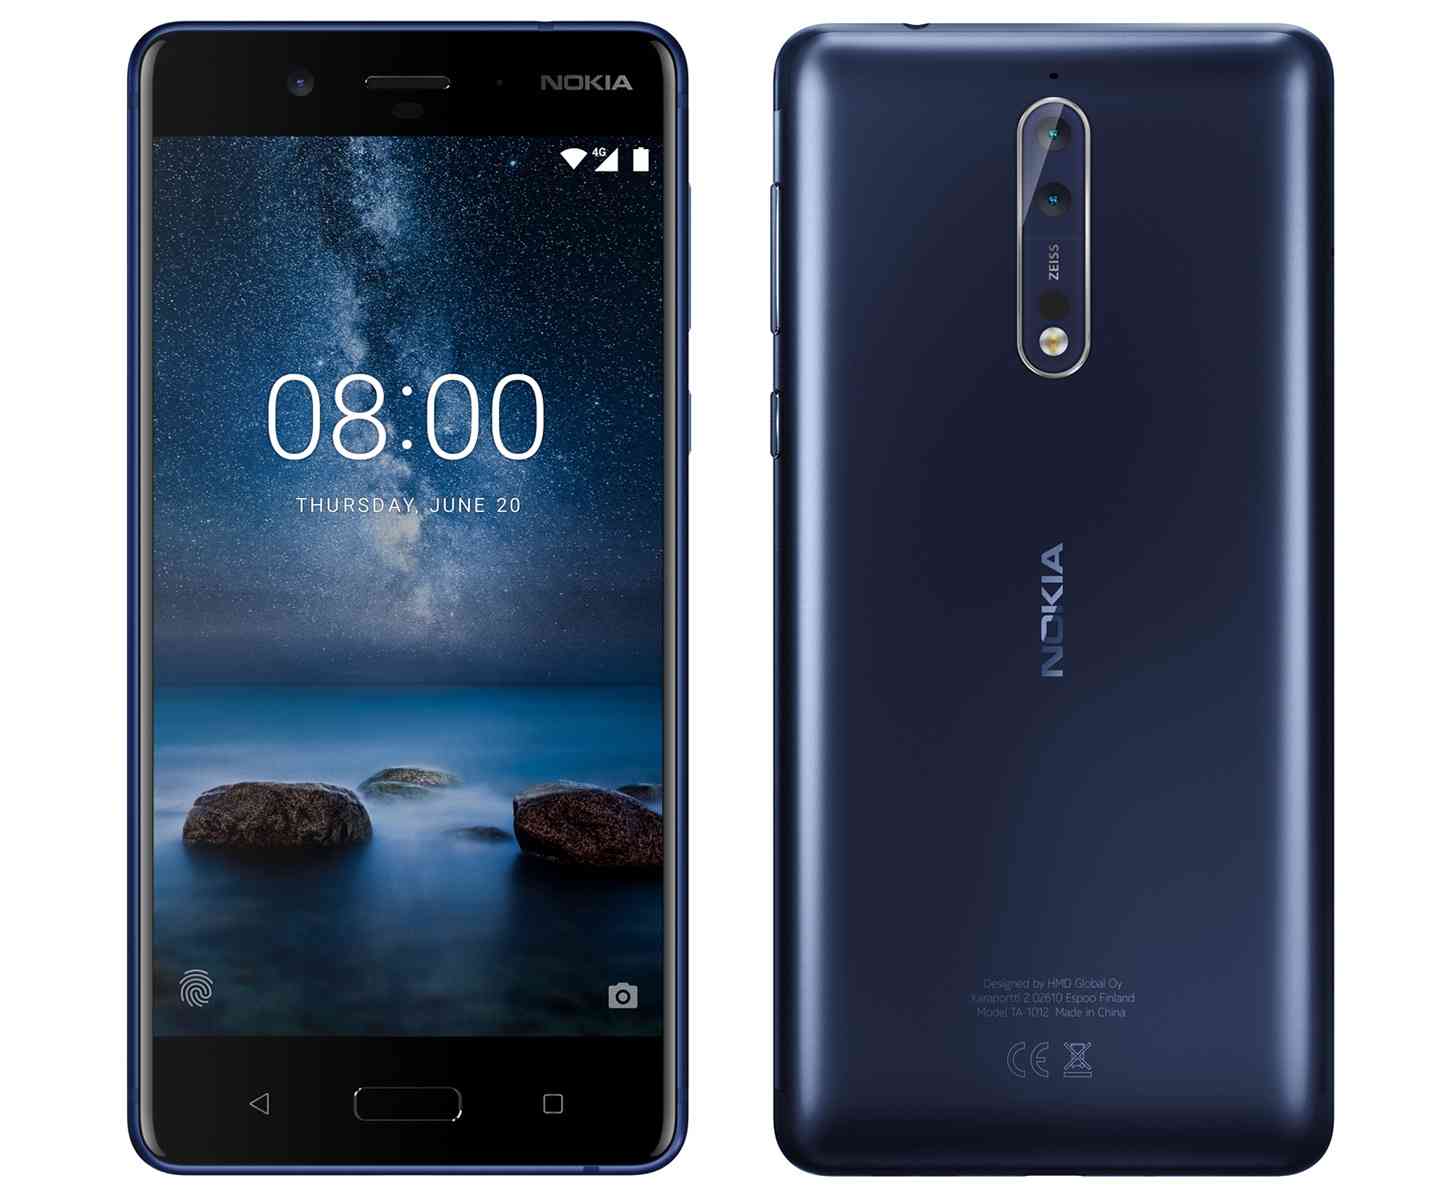 Nokia 8 image leak